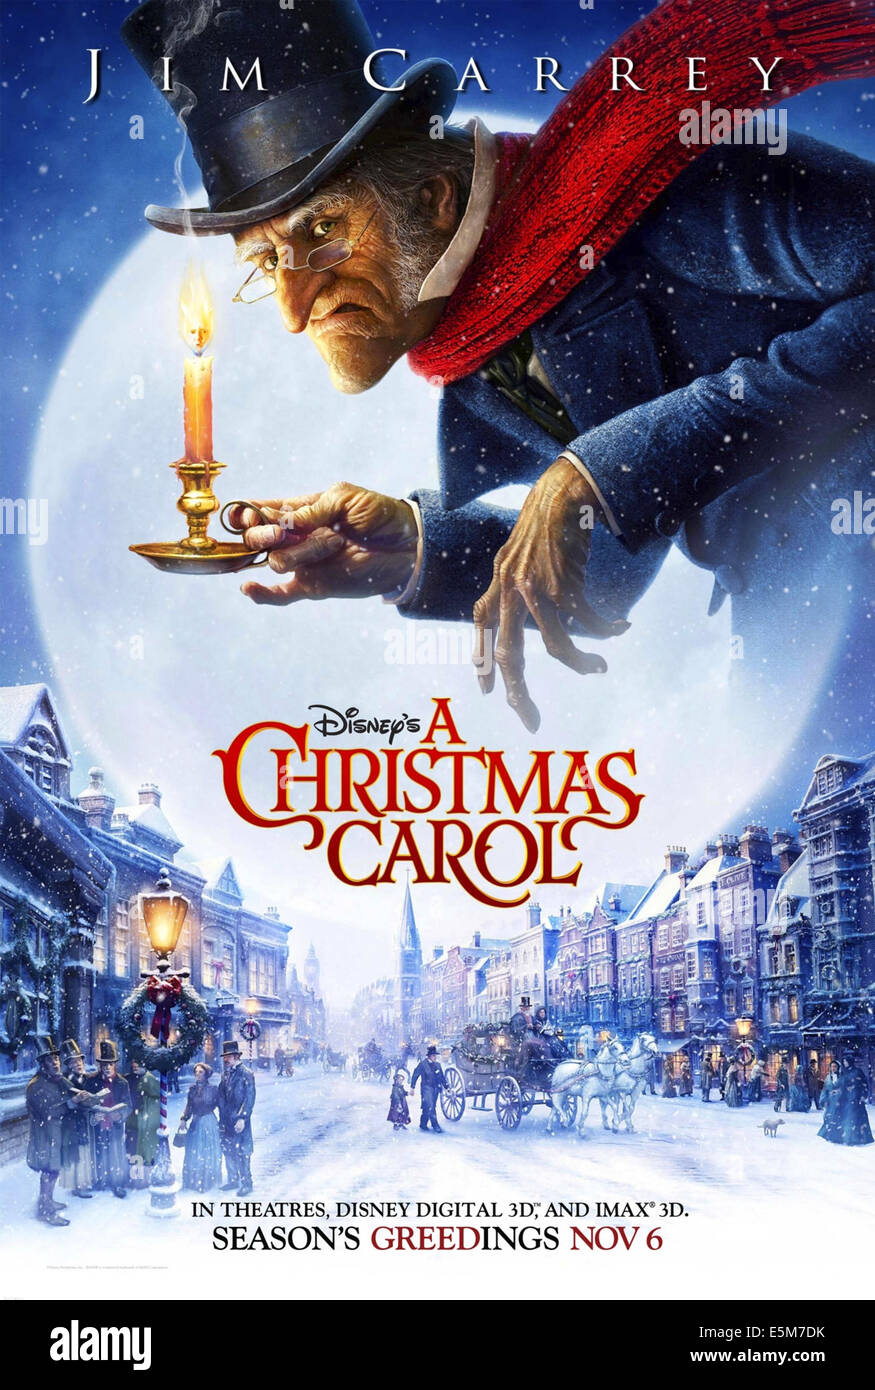 A CHRISTMAS CAROL, Ebenezer Scrooge (voice: Jim Carrey), 2009. ©Walt Disney Studios Motion Pictures/Courtesy Everett Collection Stock Photo